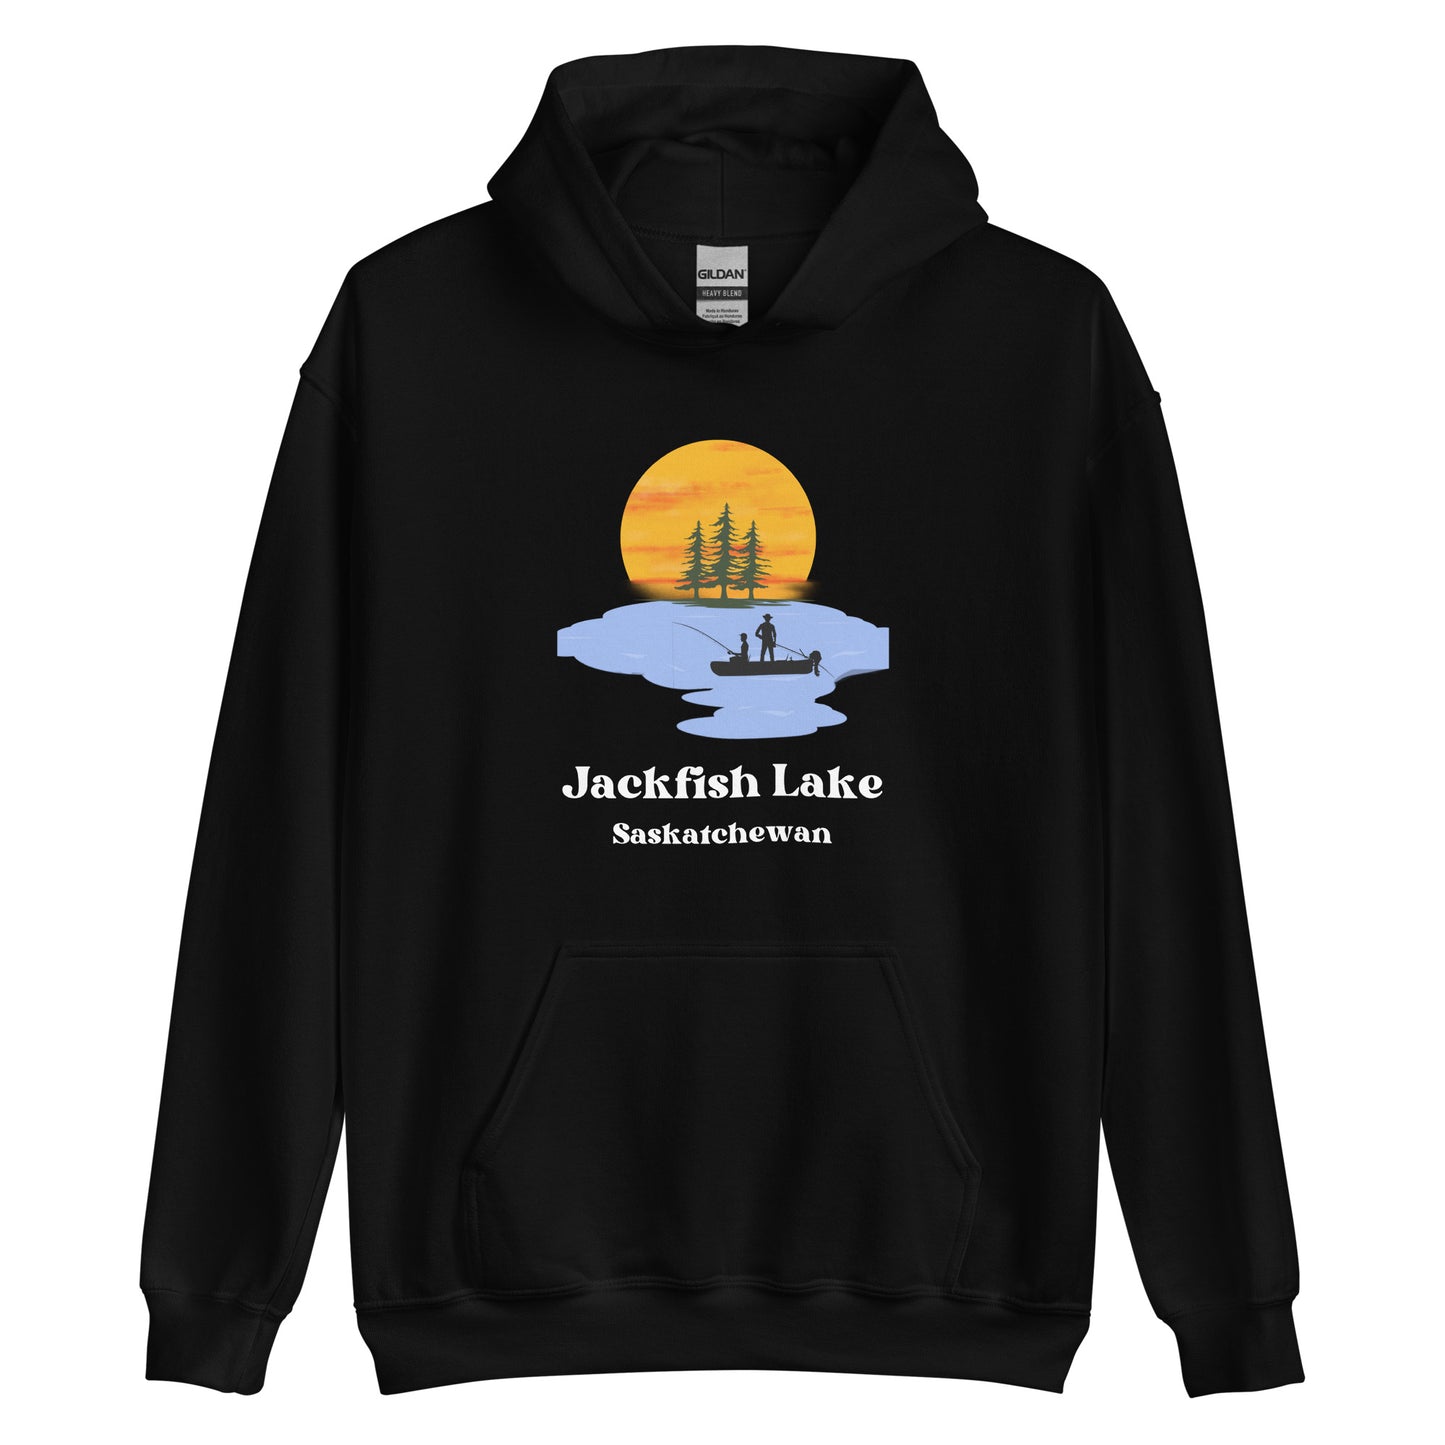 Jackfish Lake, SK - Unisex Hoodie - Fishing